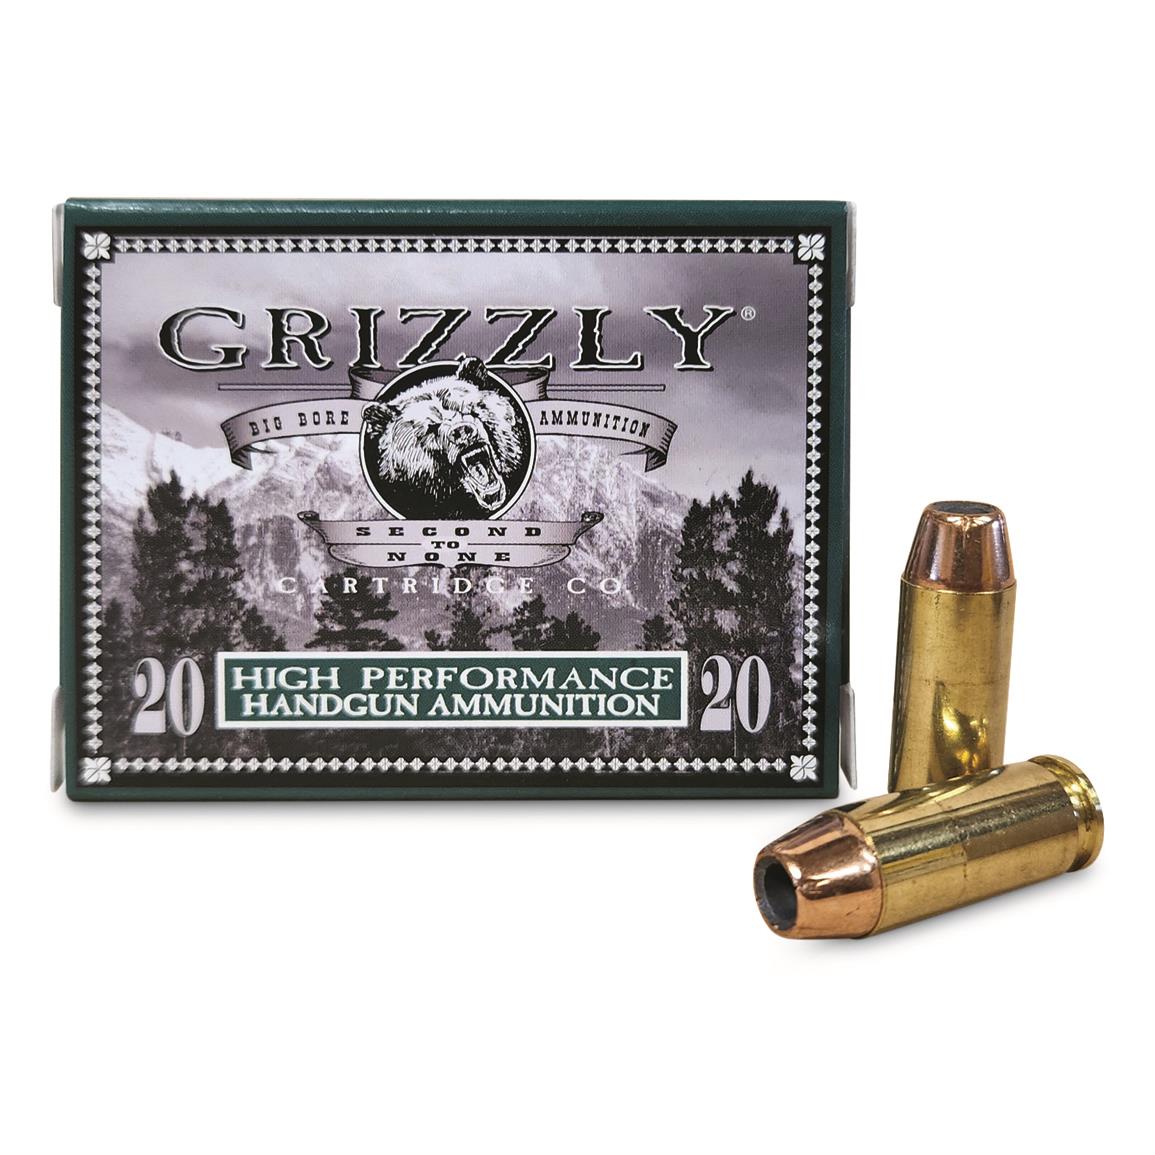 Grizzly Cartridge Co. High Performance Handgun, 10mm, JHP, 180 Grain, 20 Rounds